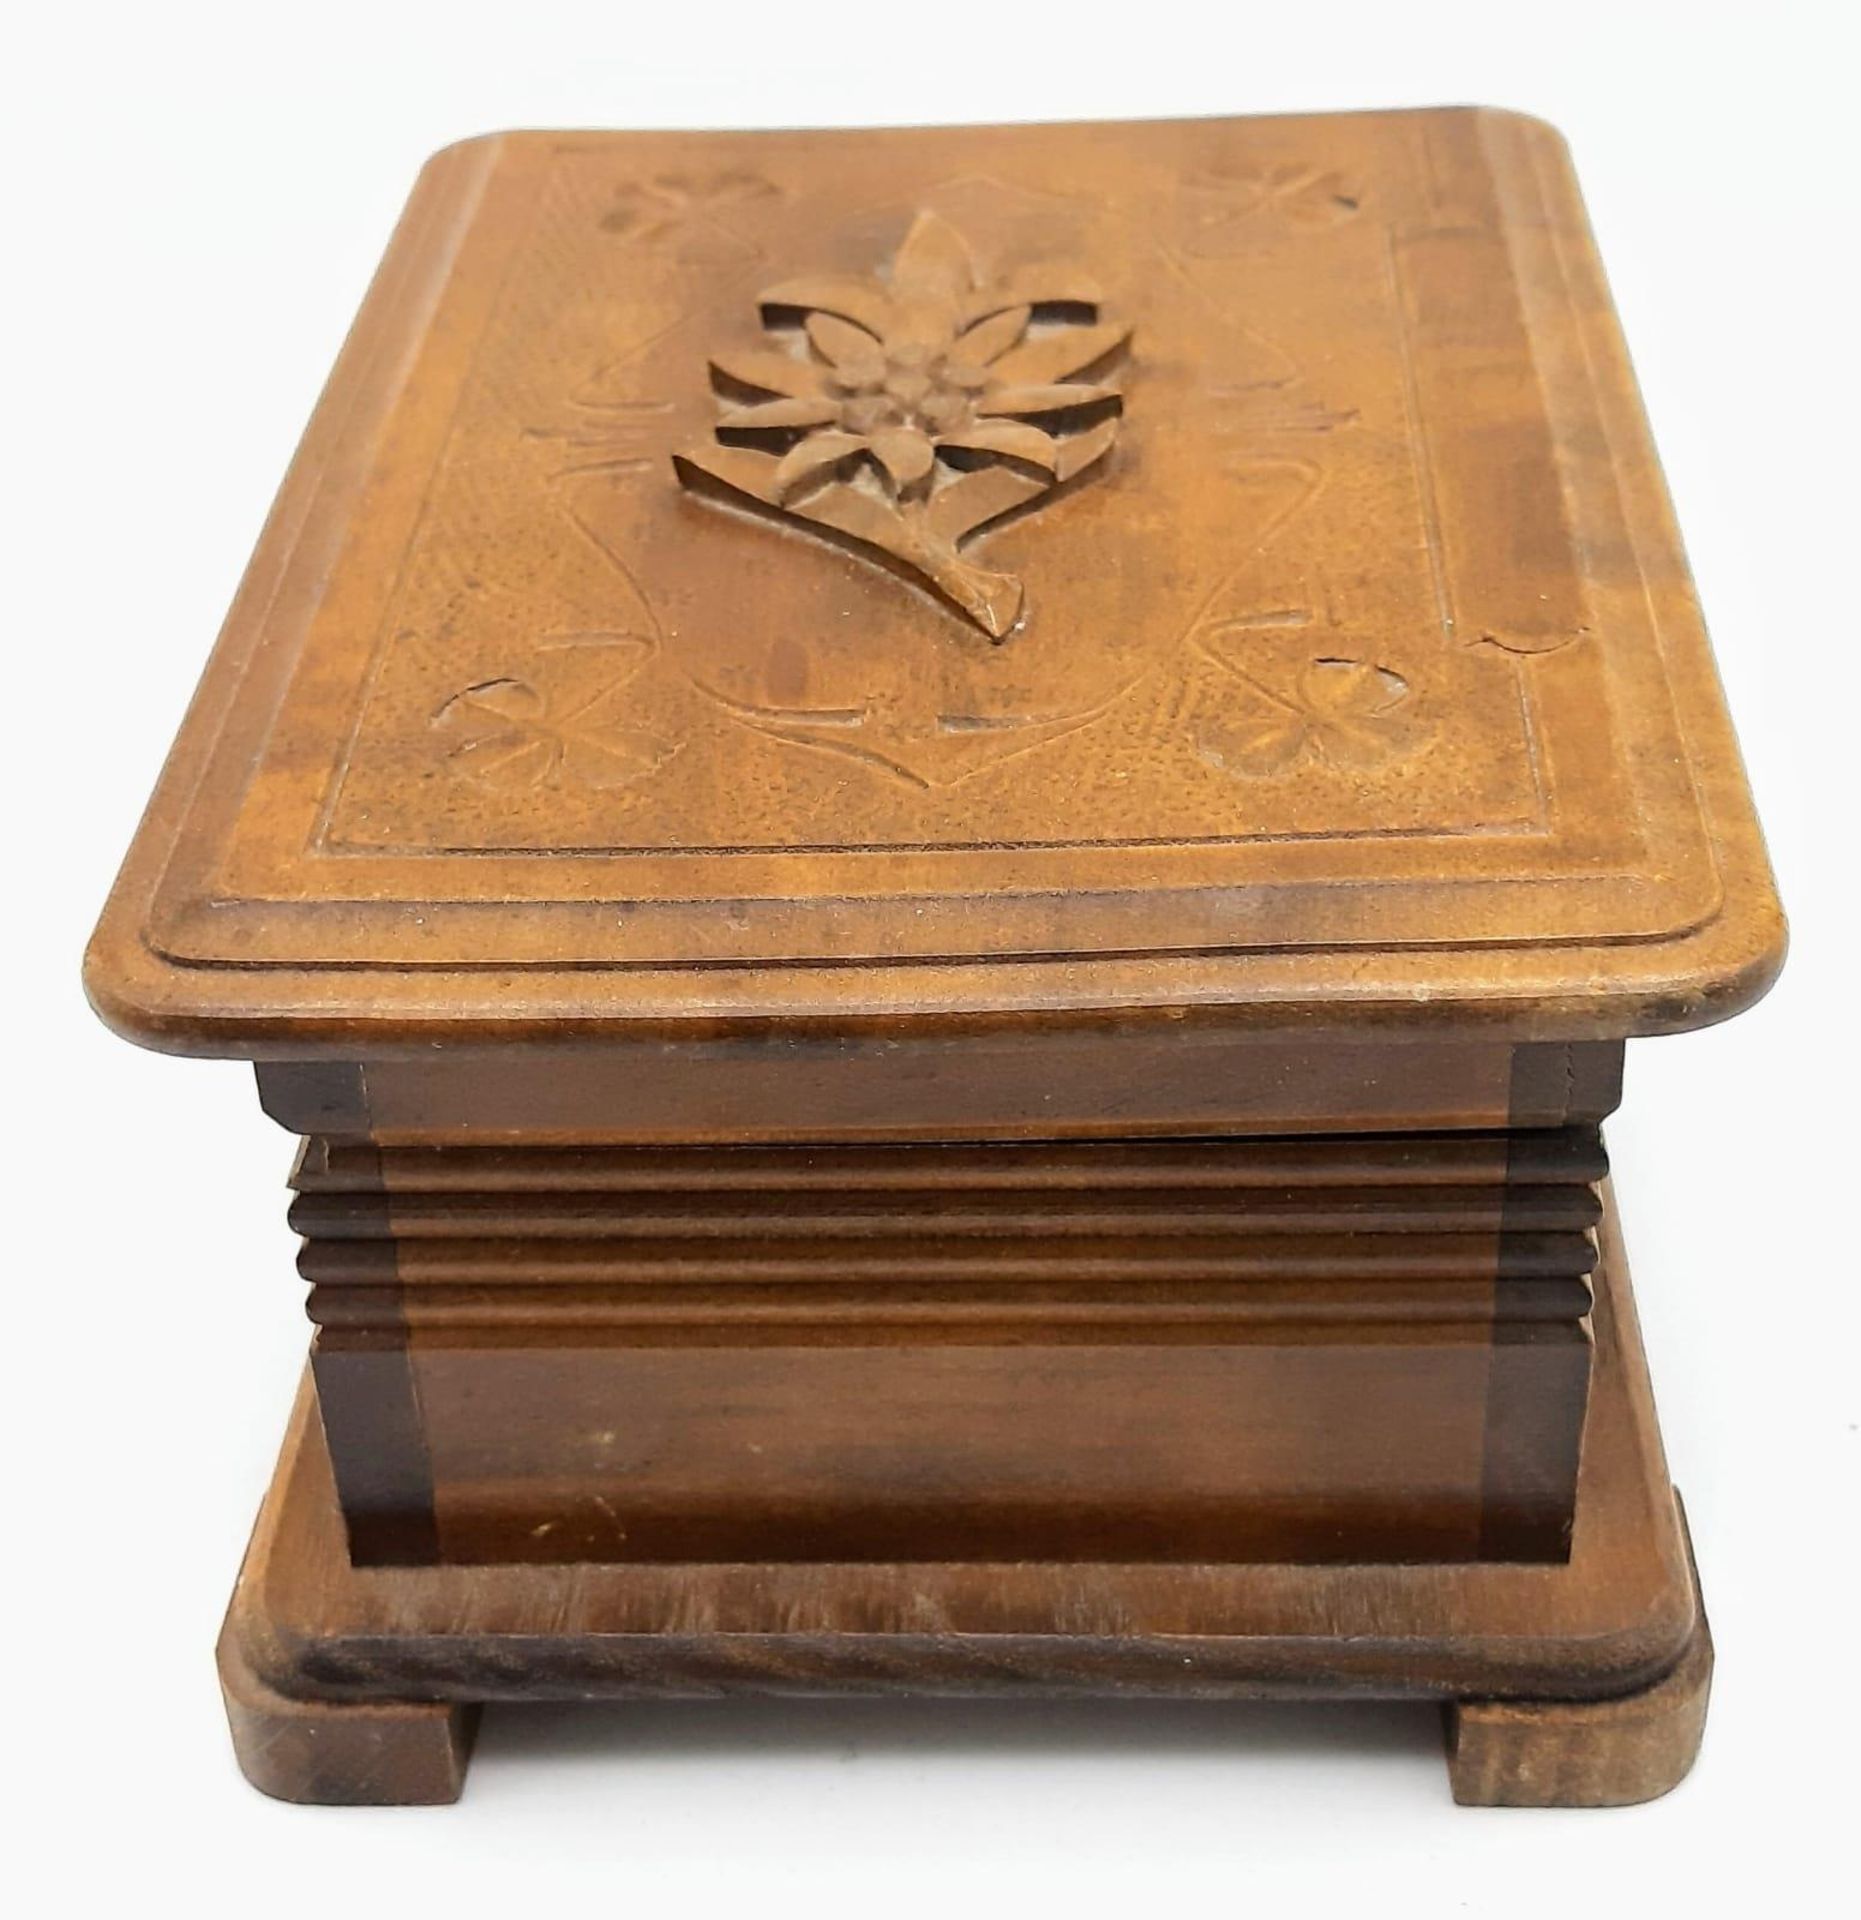 A Vintage Musical Decorative Wooden Trinket Box. Winder on base. In working order. 14cm x 10cm. - Image 3 of 6